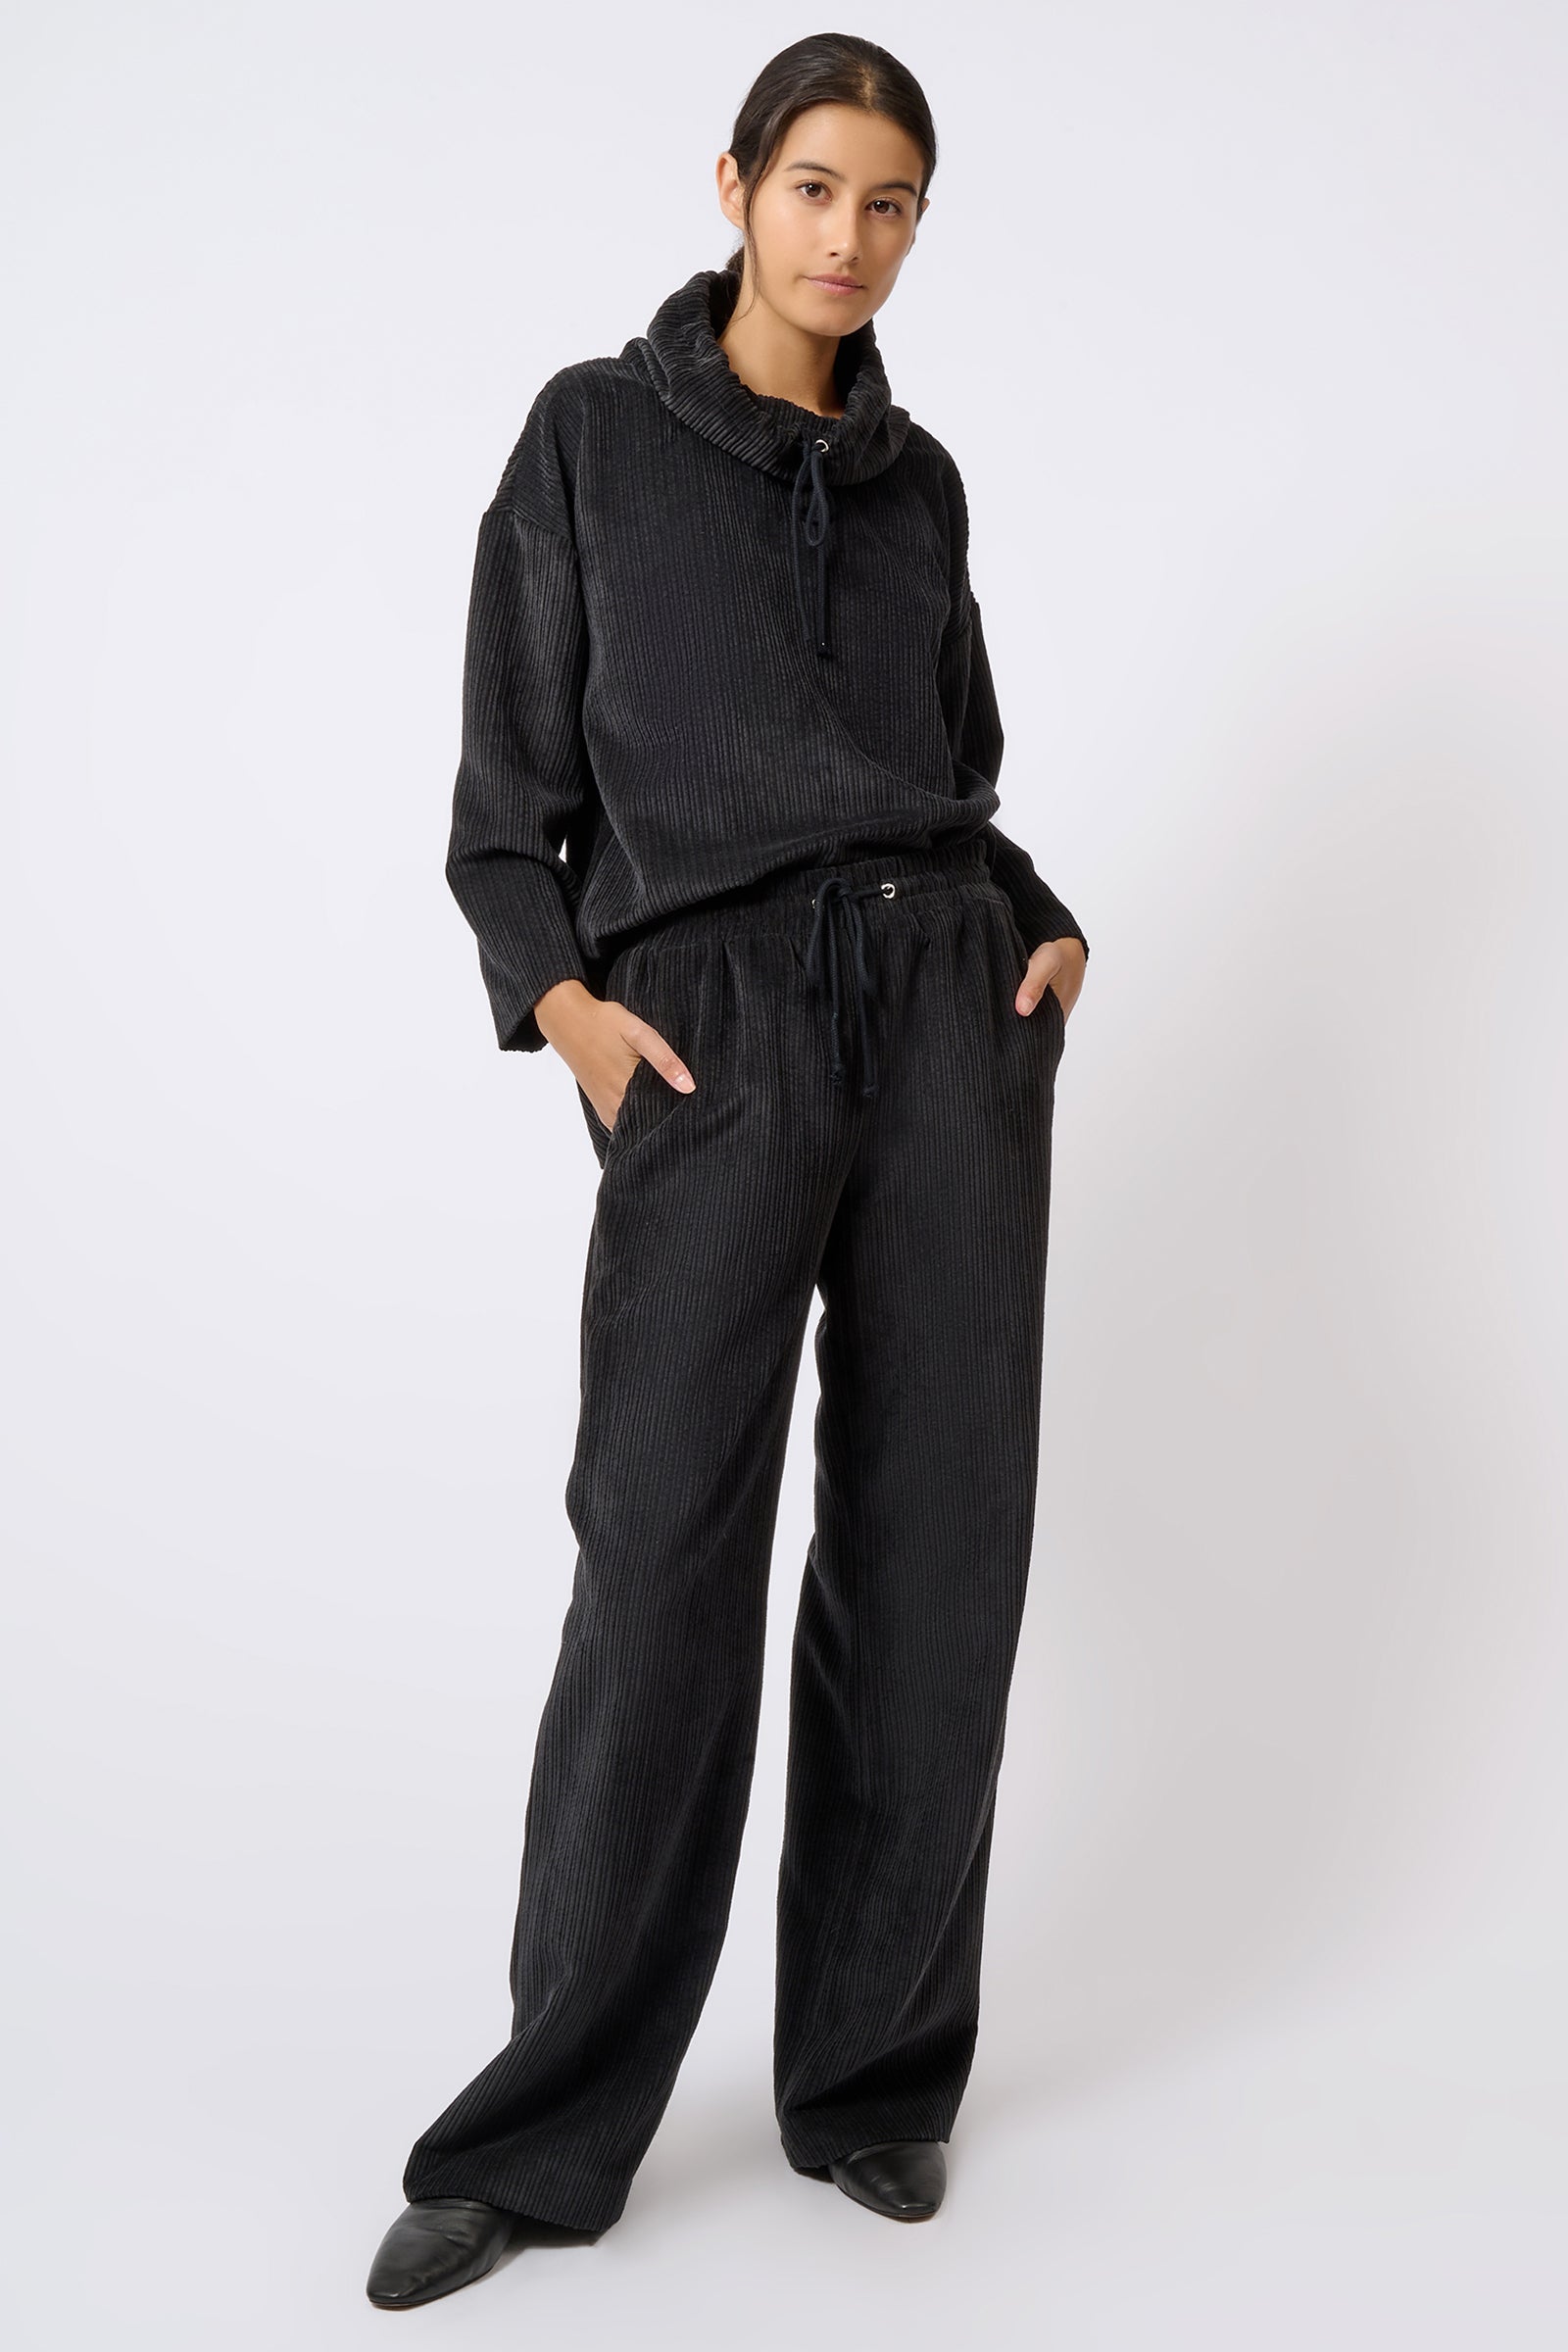 Kal Rieman Debbie Drawstring Pant in Black on Model Hand in Pocket Full Front View